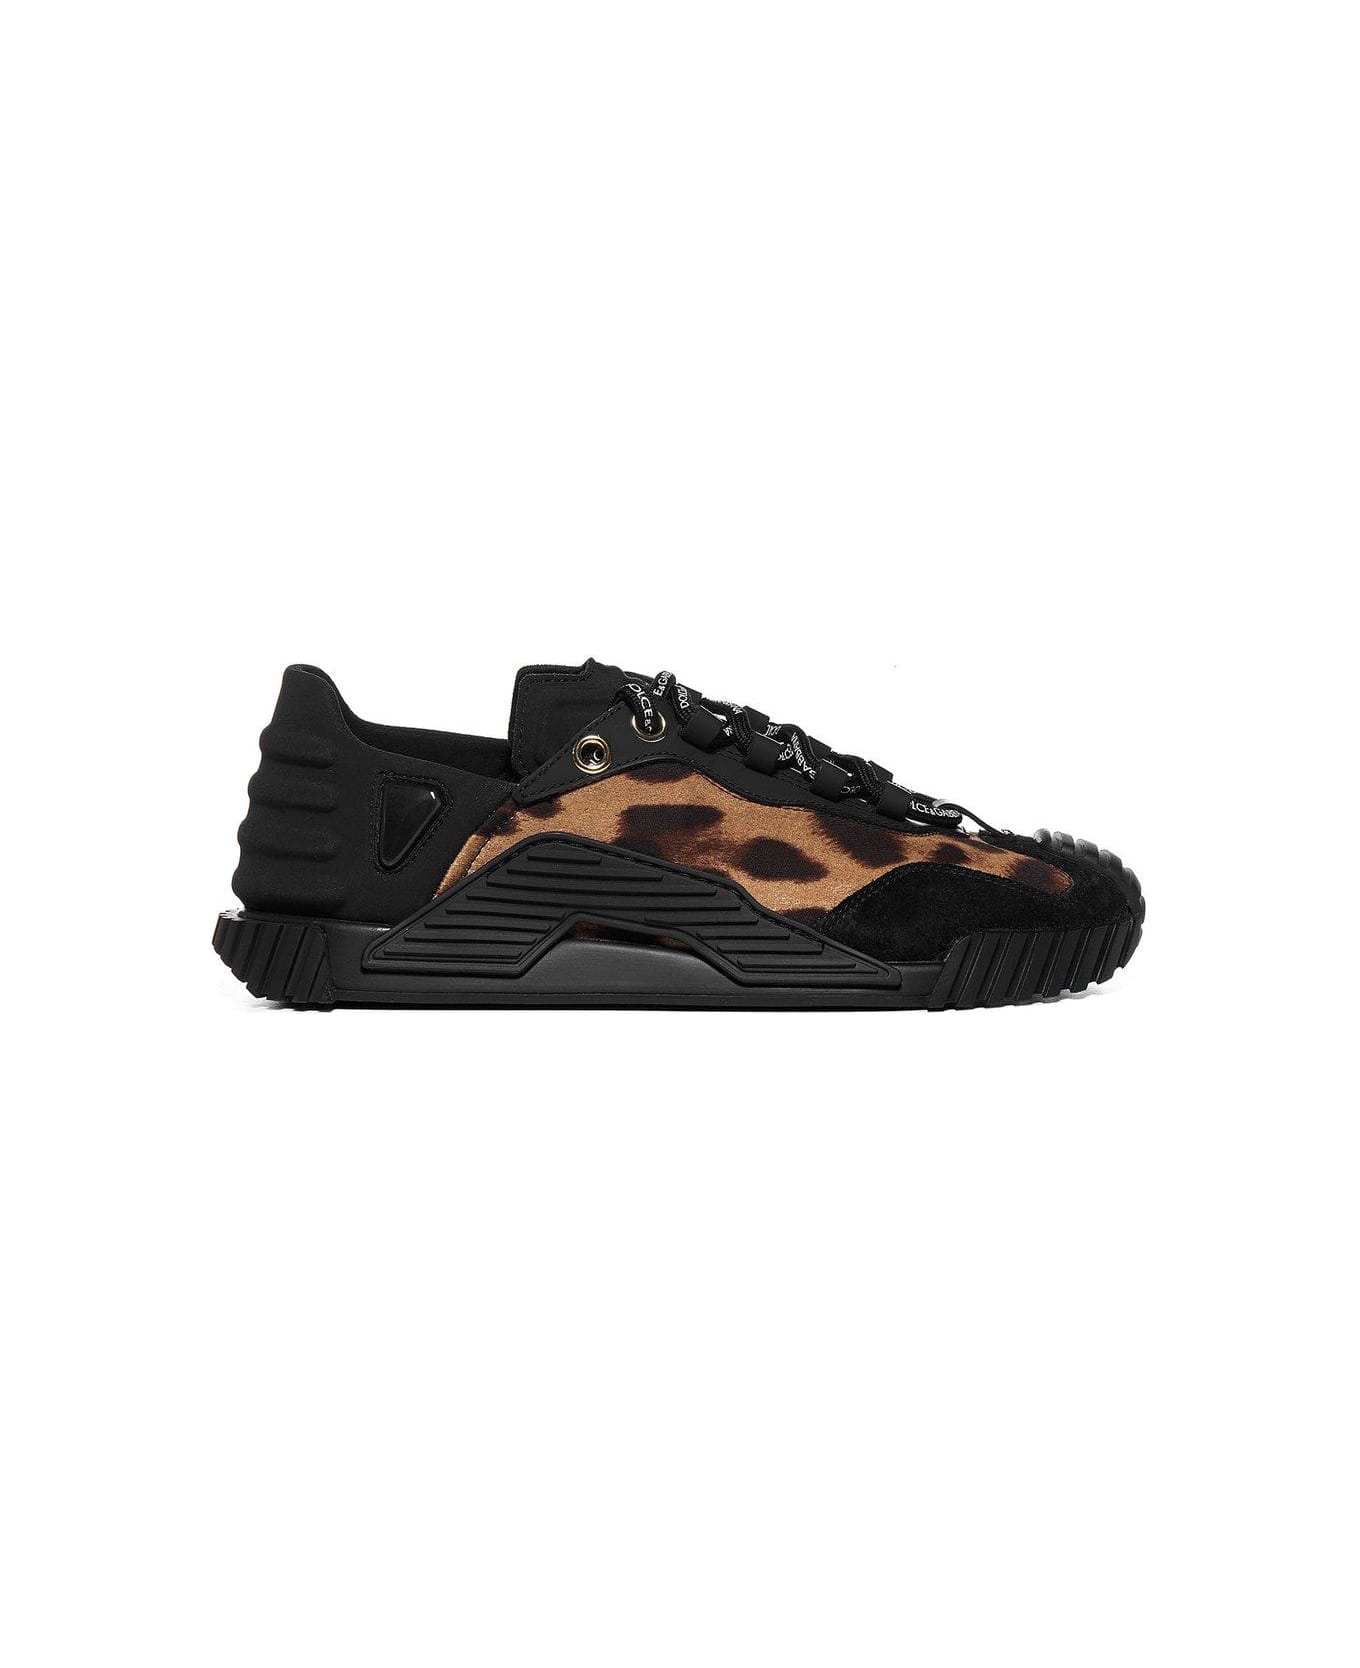 Dolce & Gabbana Ns1 Sneakers - Nero/leopardo